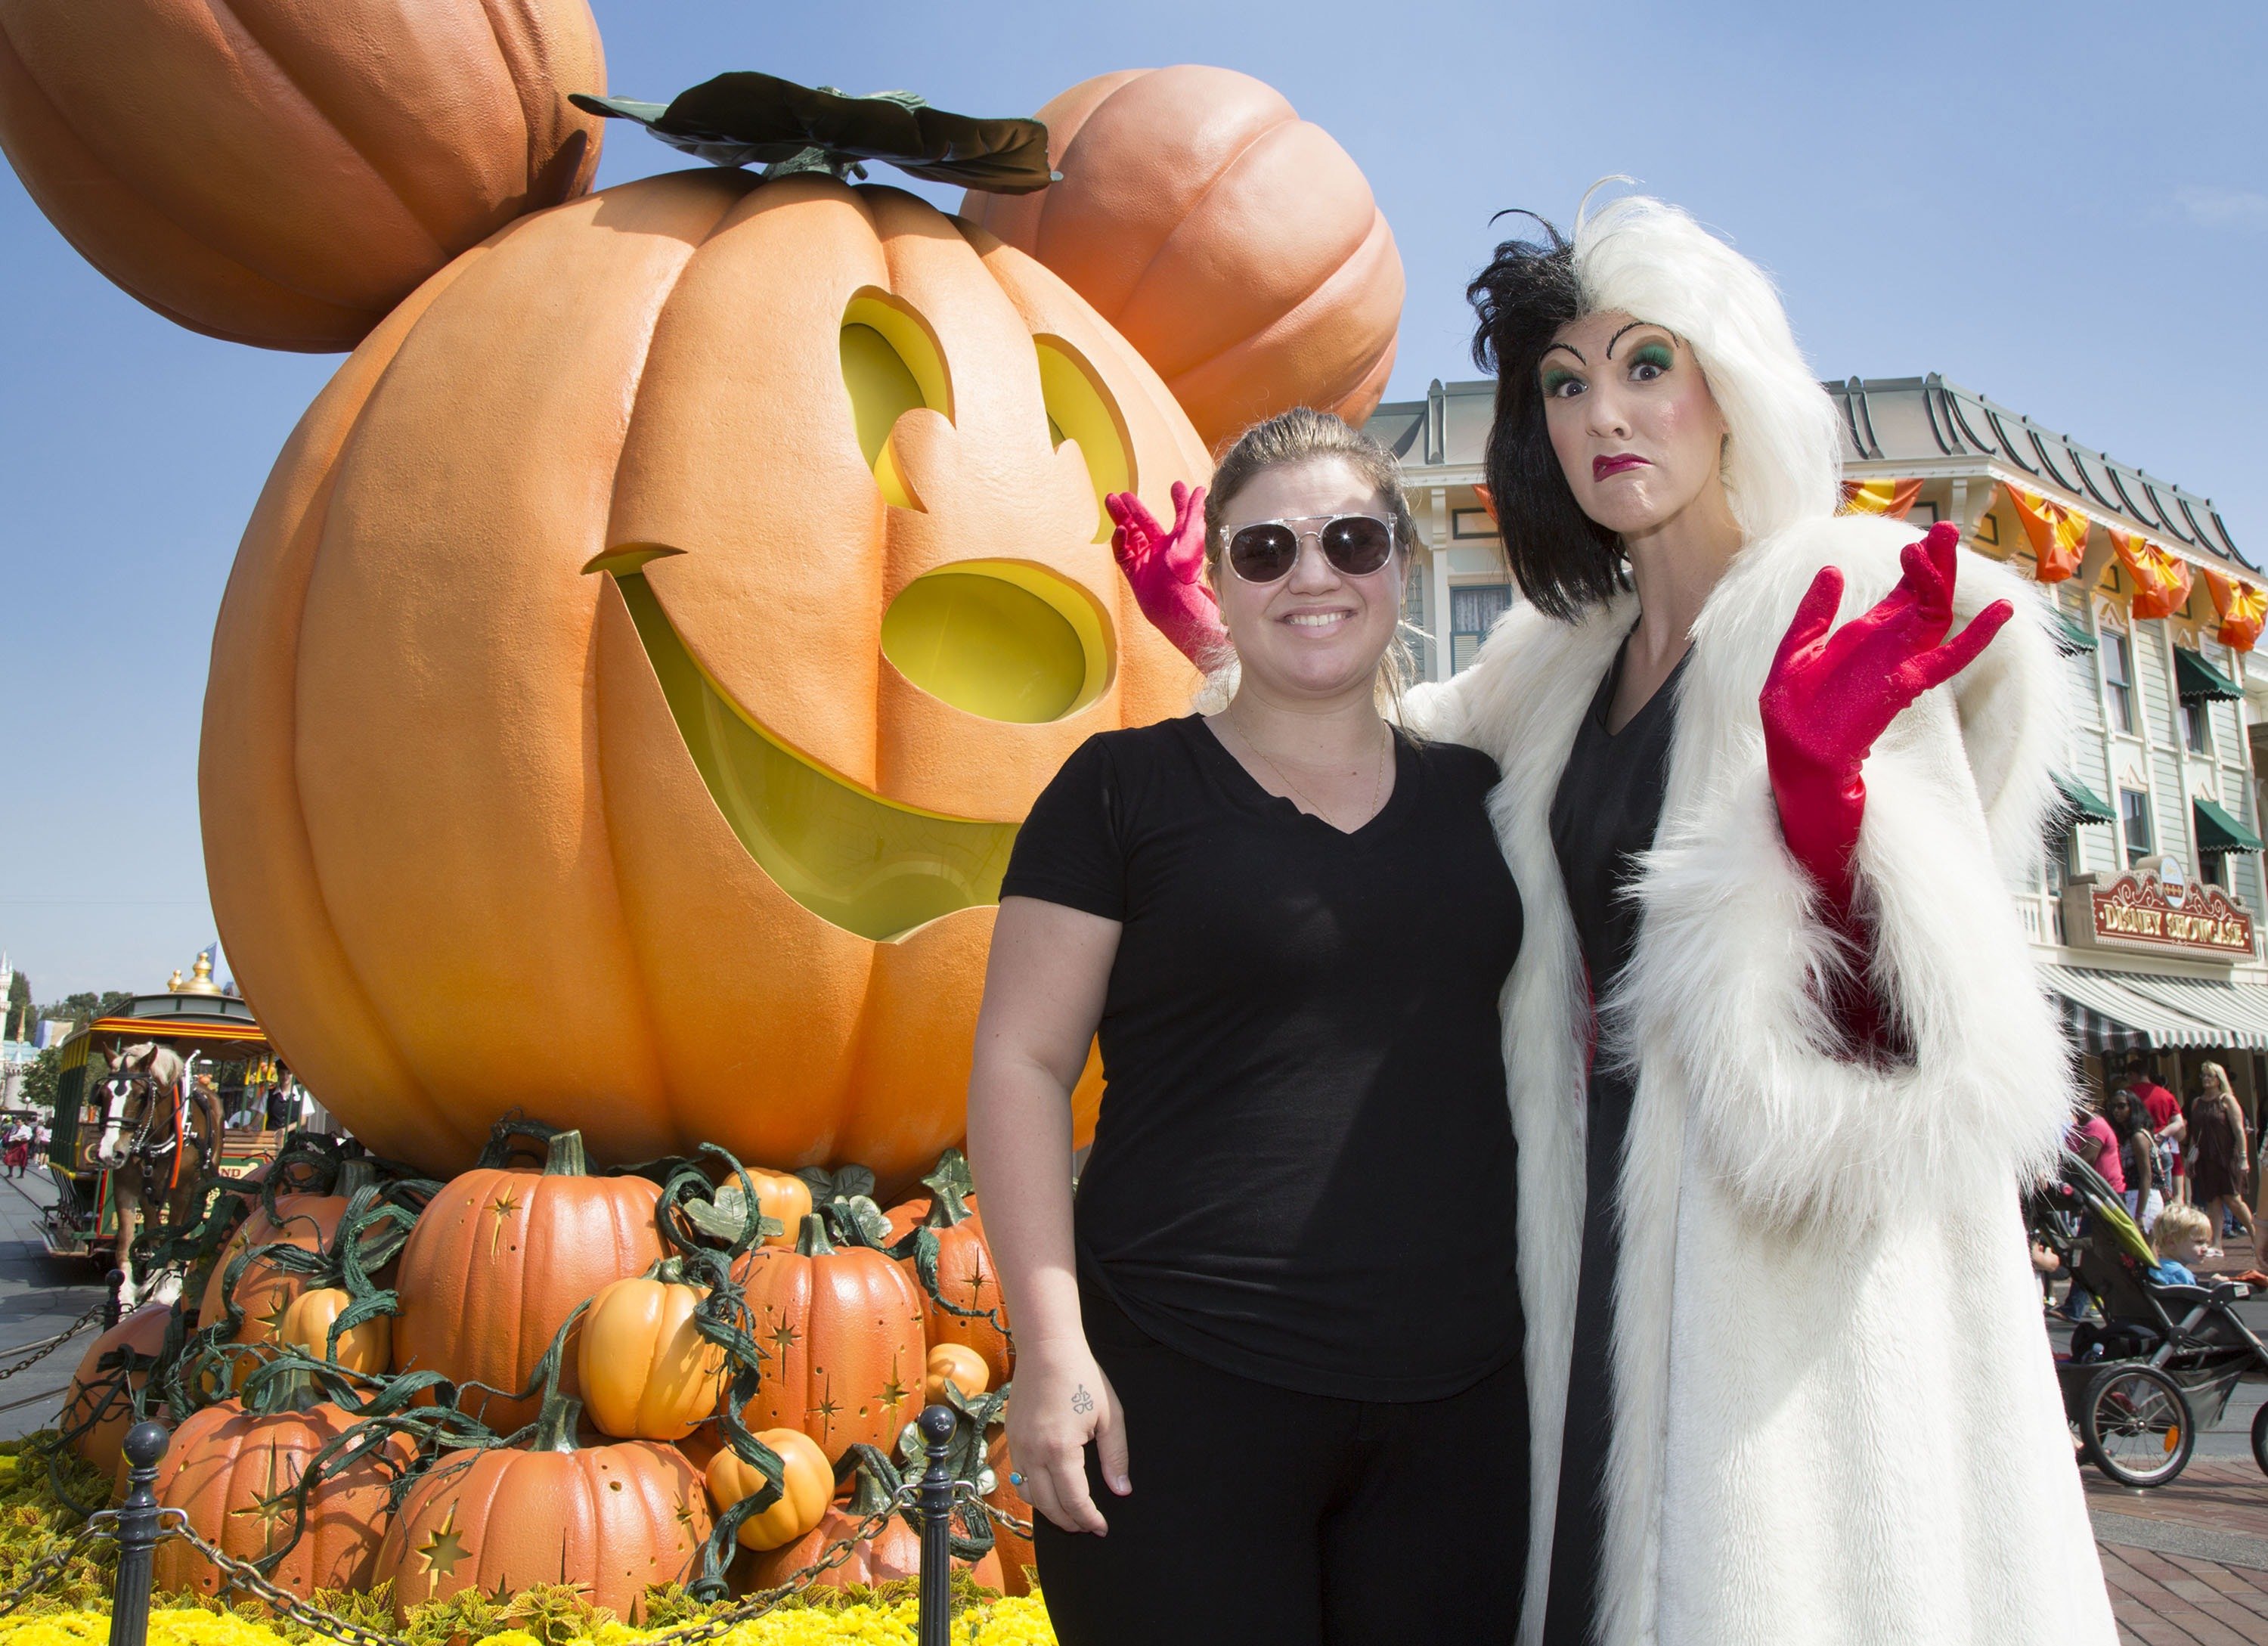 Kelly Clarkson smiles next to Disneyland's Cruella de Vil on a sunny day